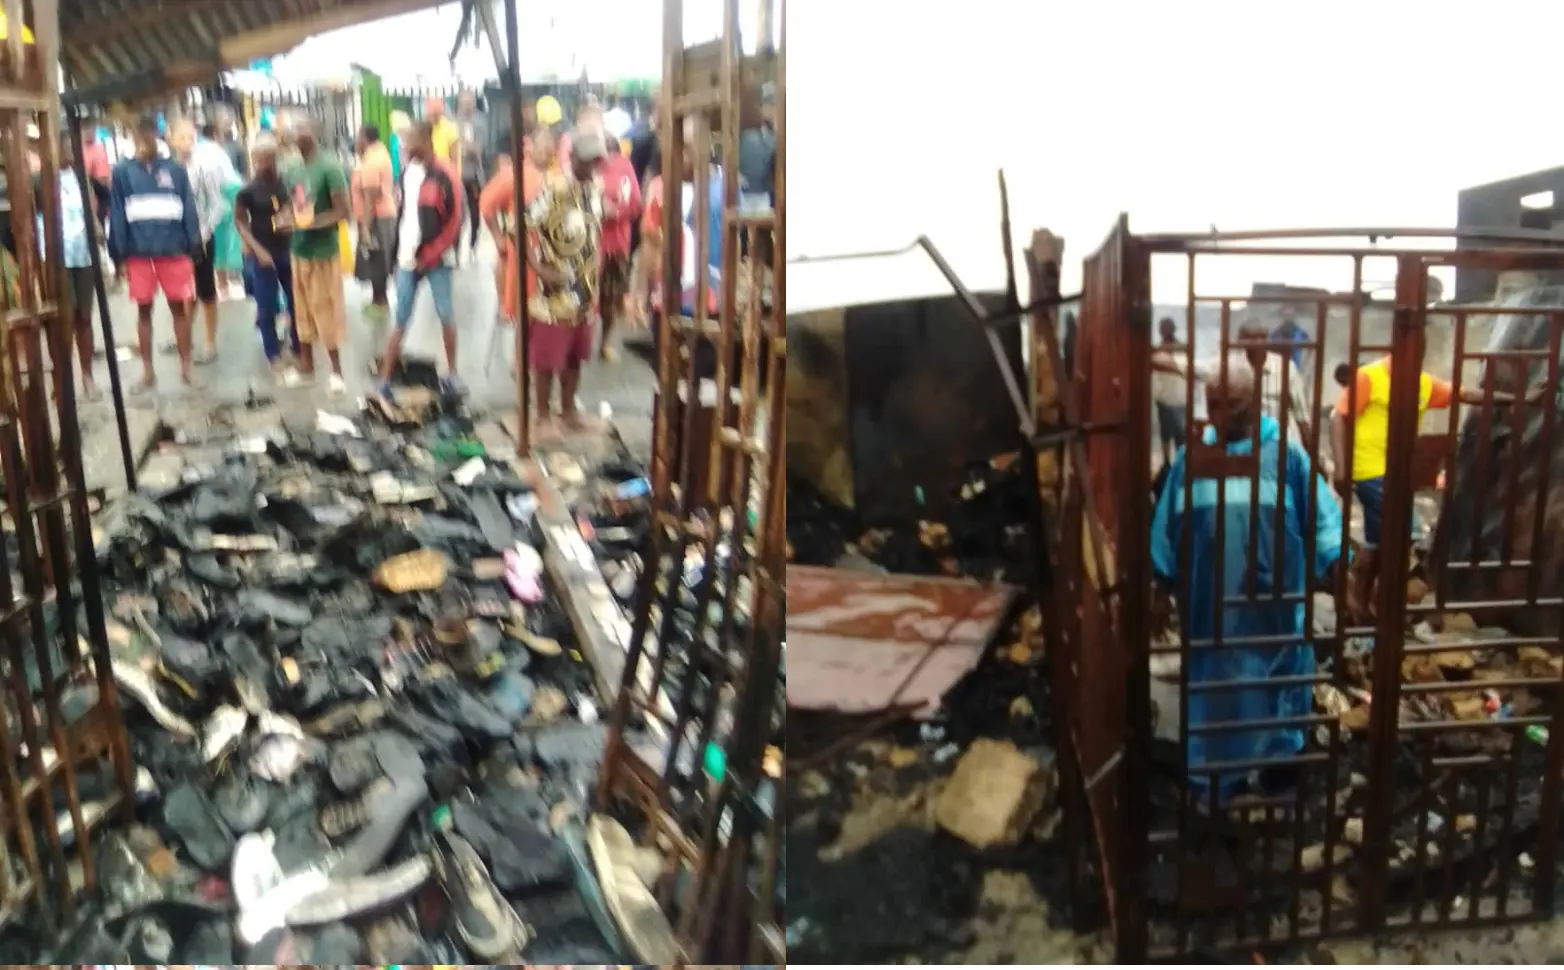 Calabar: Fire Burns Down Shops, Goods Worth Millions in Watt Market